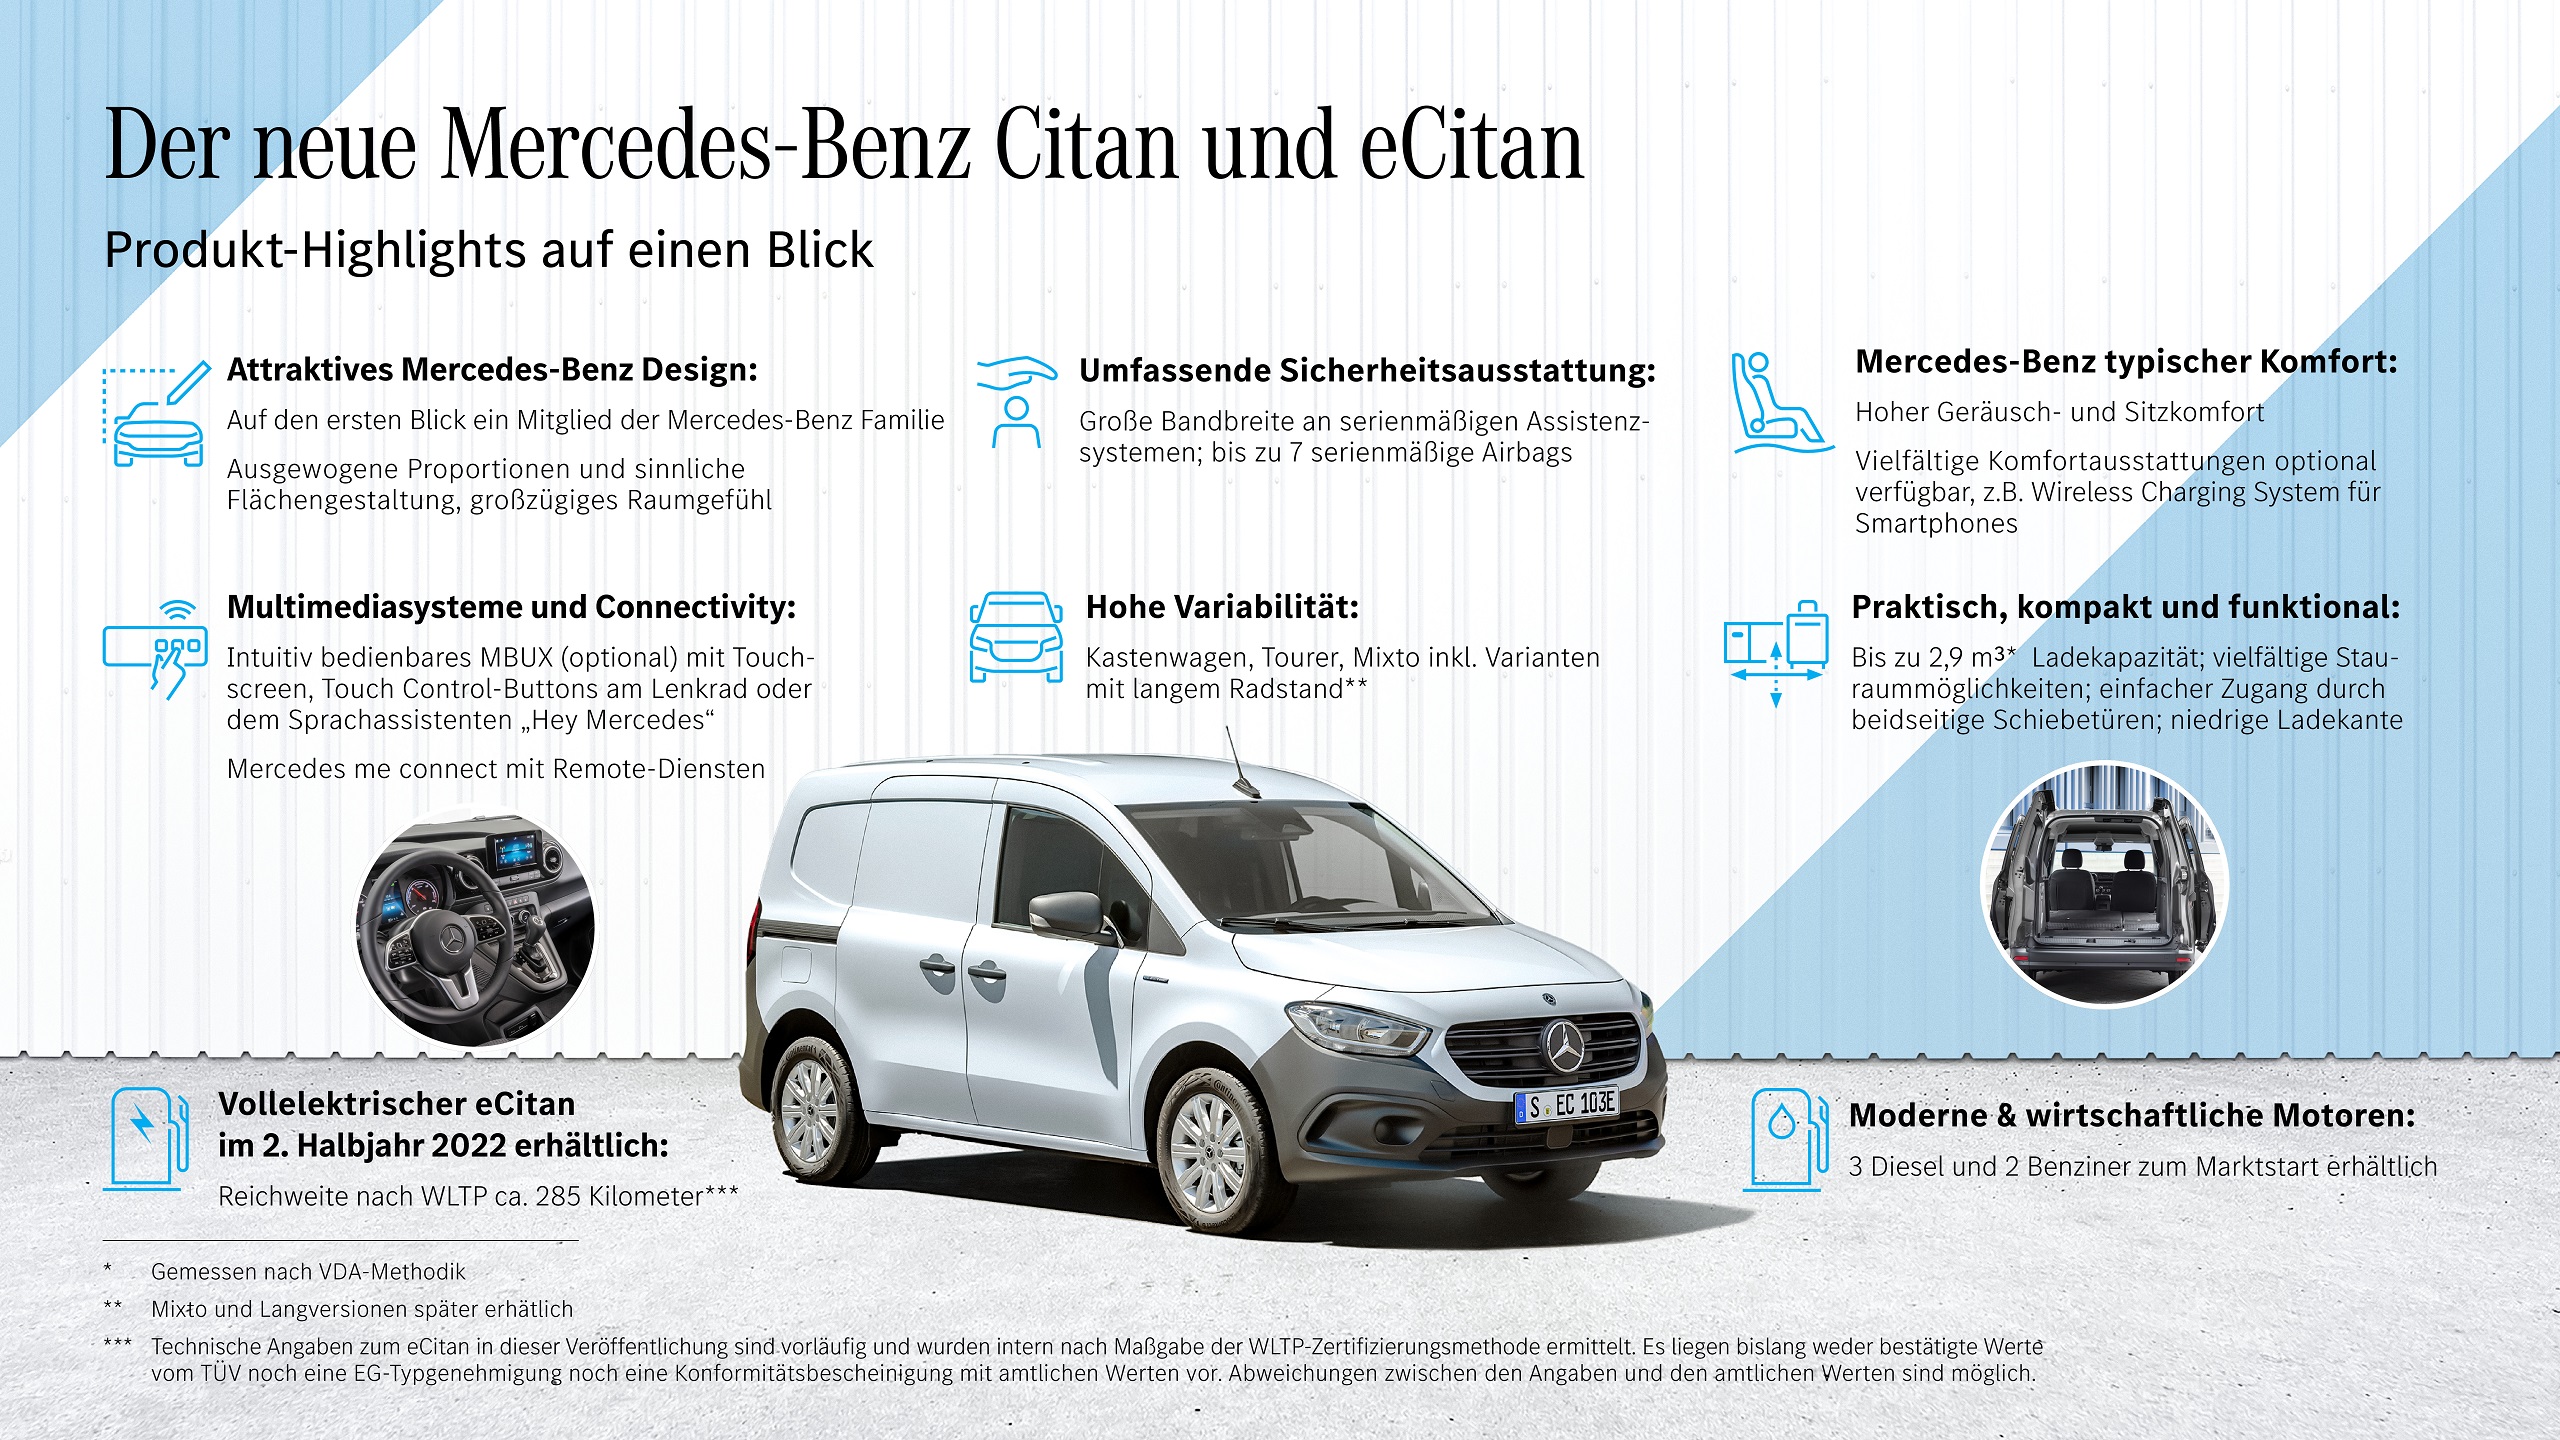 2022 Mercedes-Benz Citan Infographics Wallpapers #112 of 115